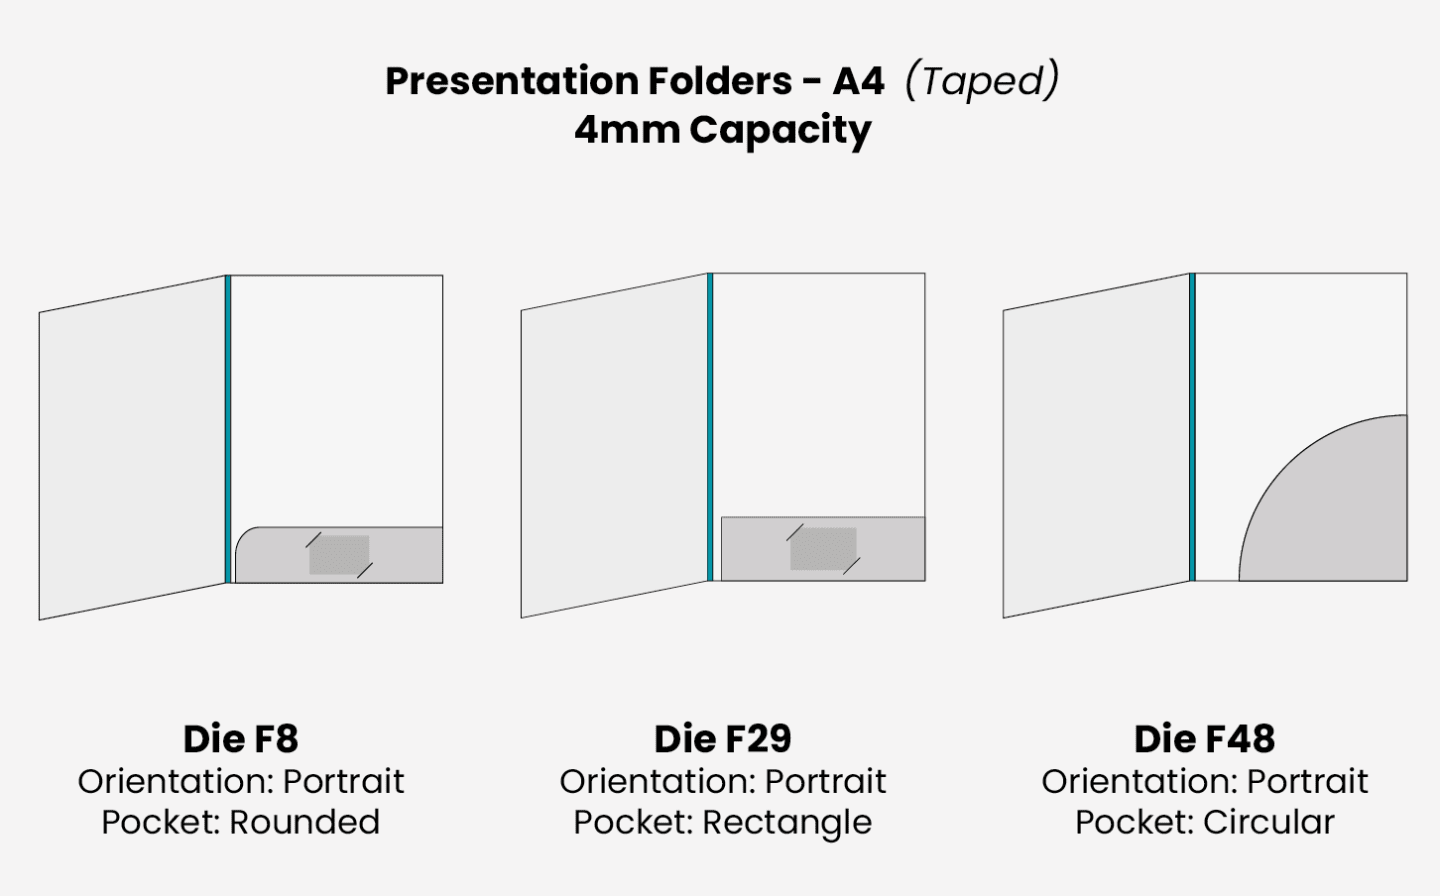 A4 Presentation Folder - Taped - 4mm Capacity